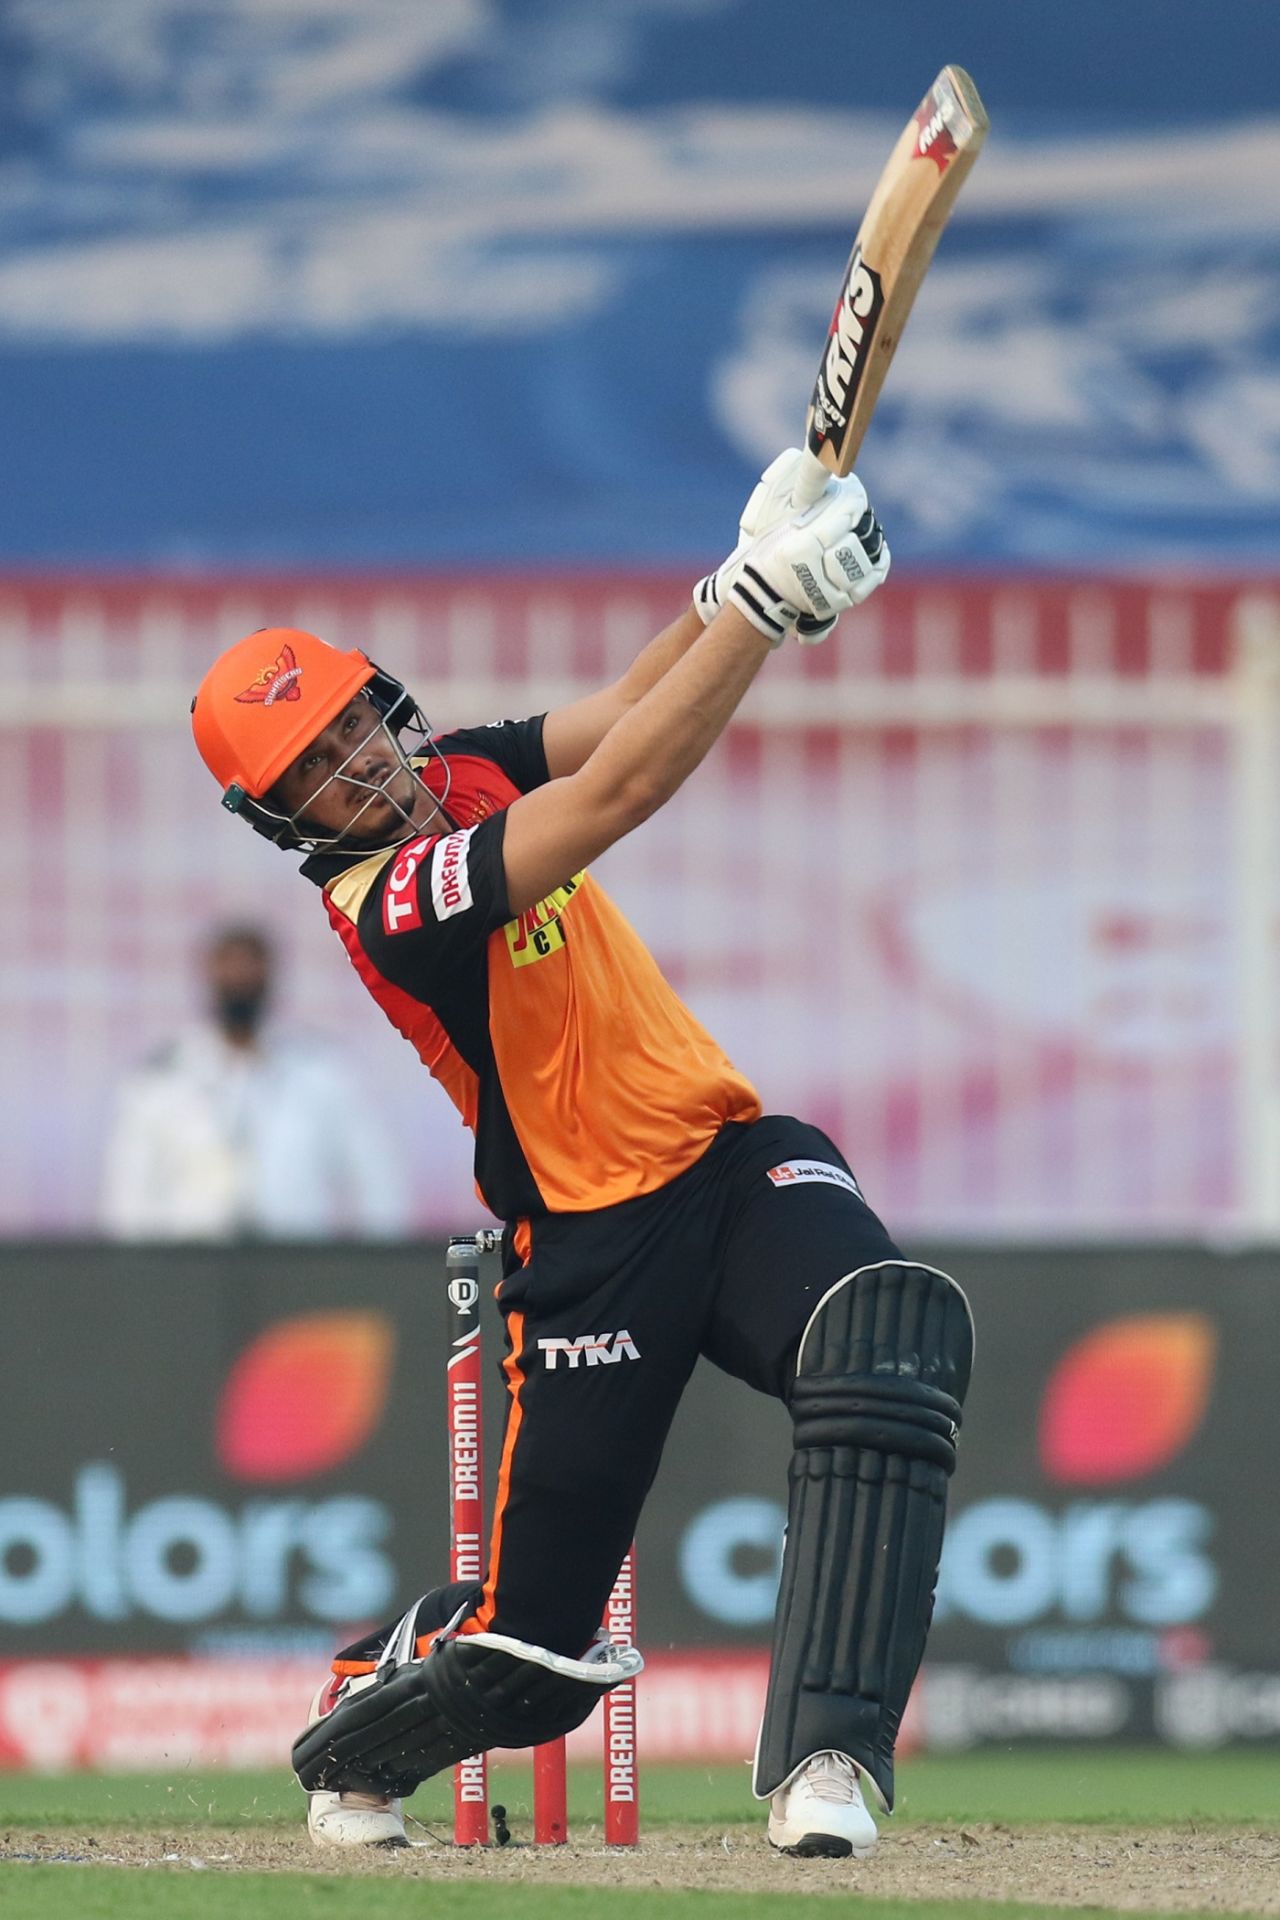 Abdul Samad cracks a six over long-on, Mumbai Indians vs Sunrisers Hyderabad, IPL 2020, Sharjah, October 4, 2020